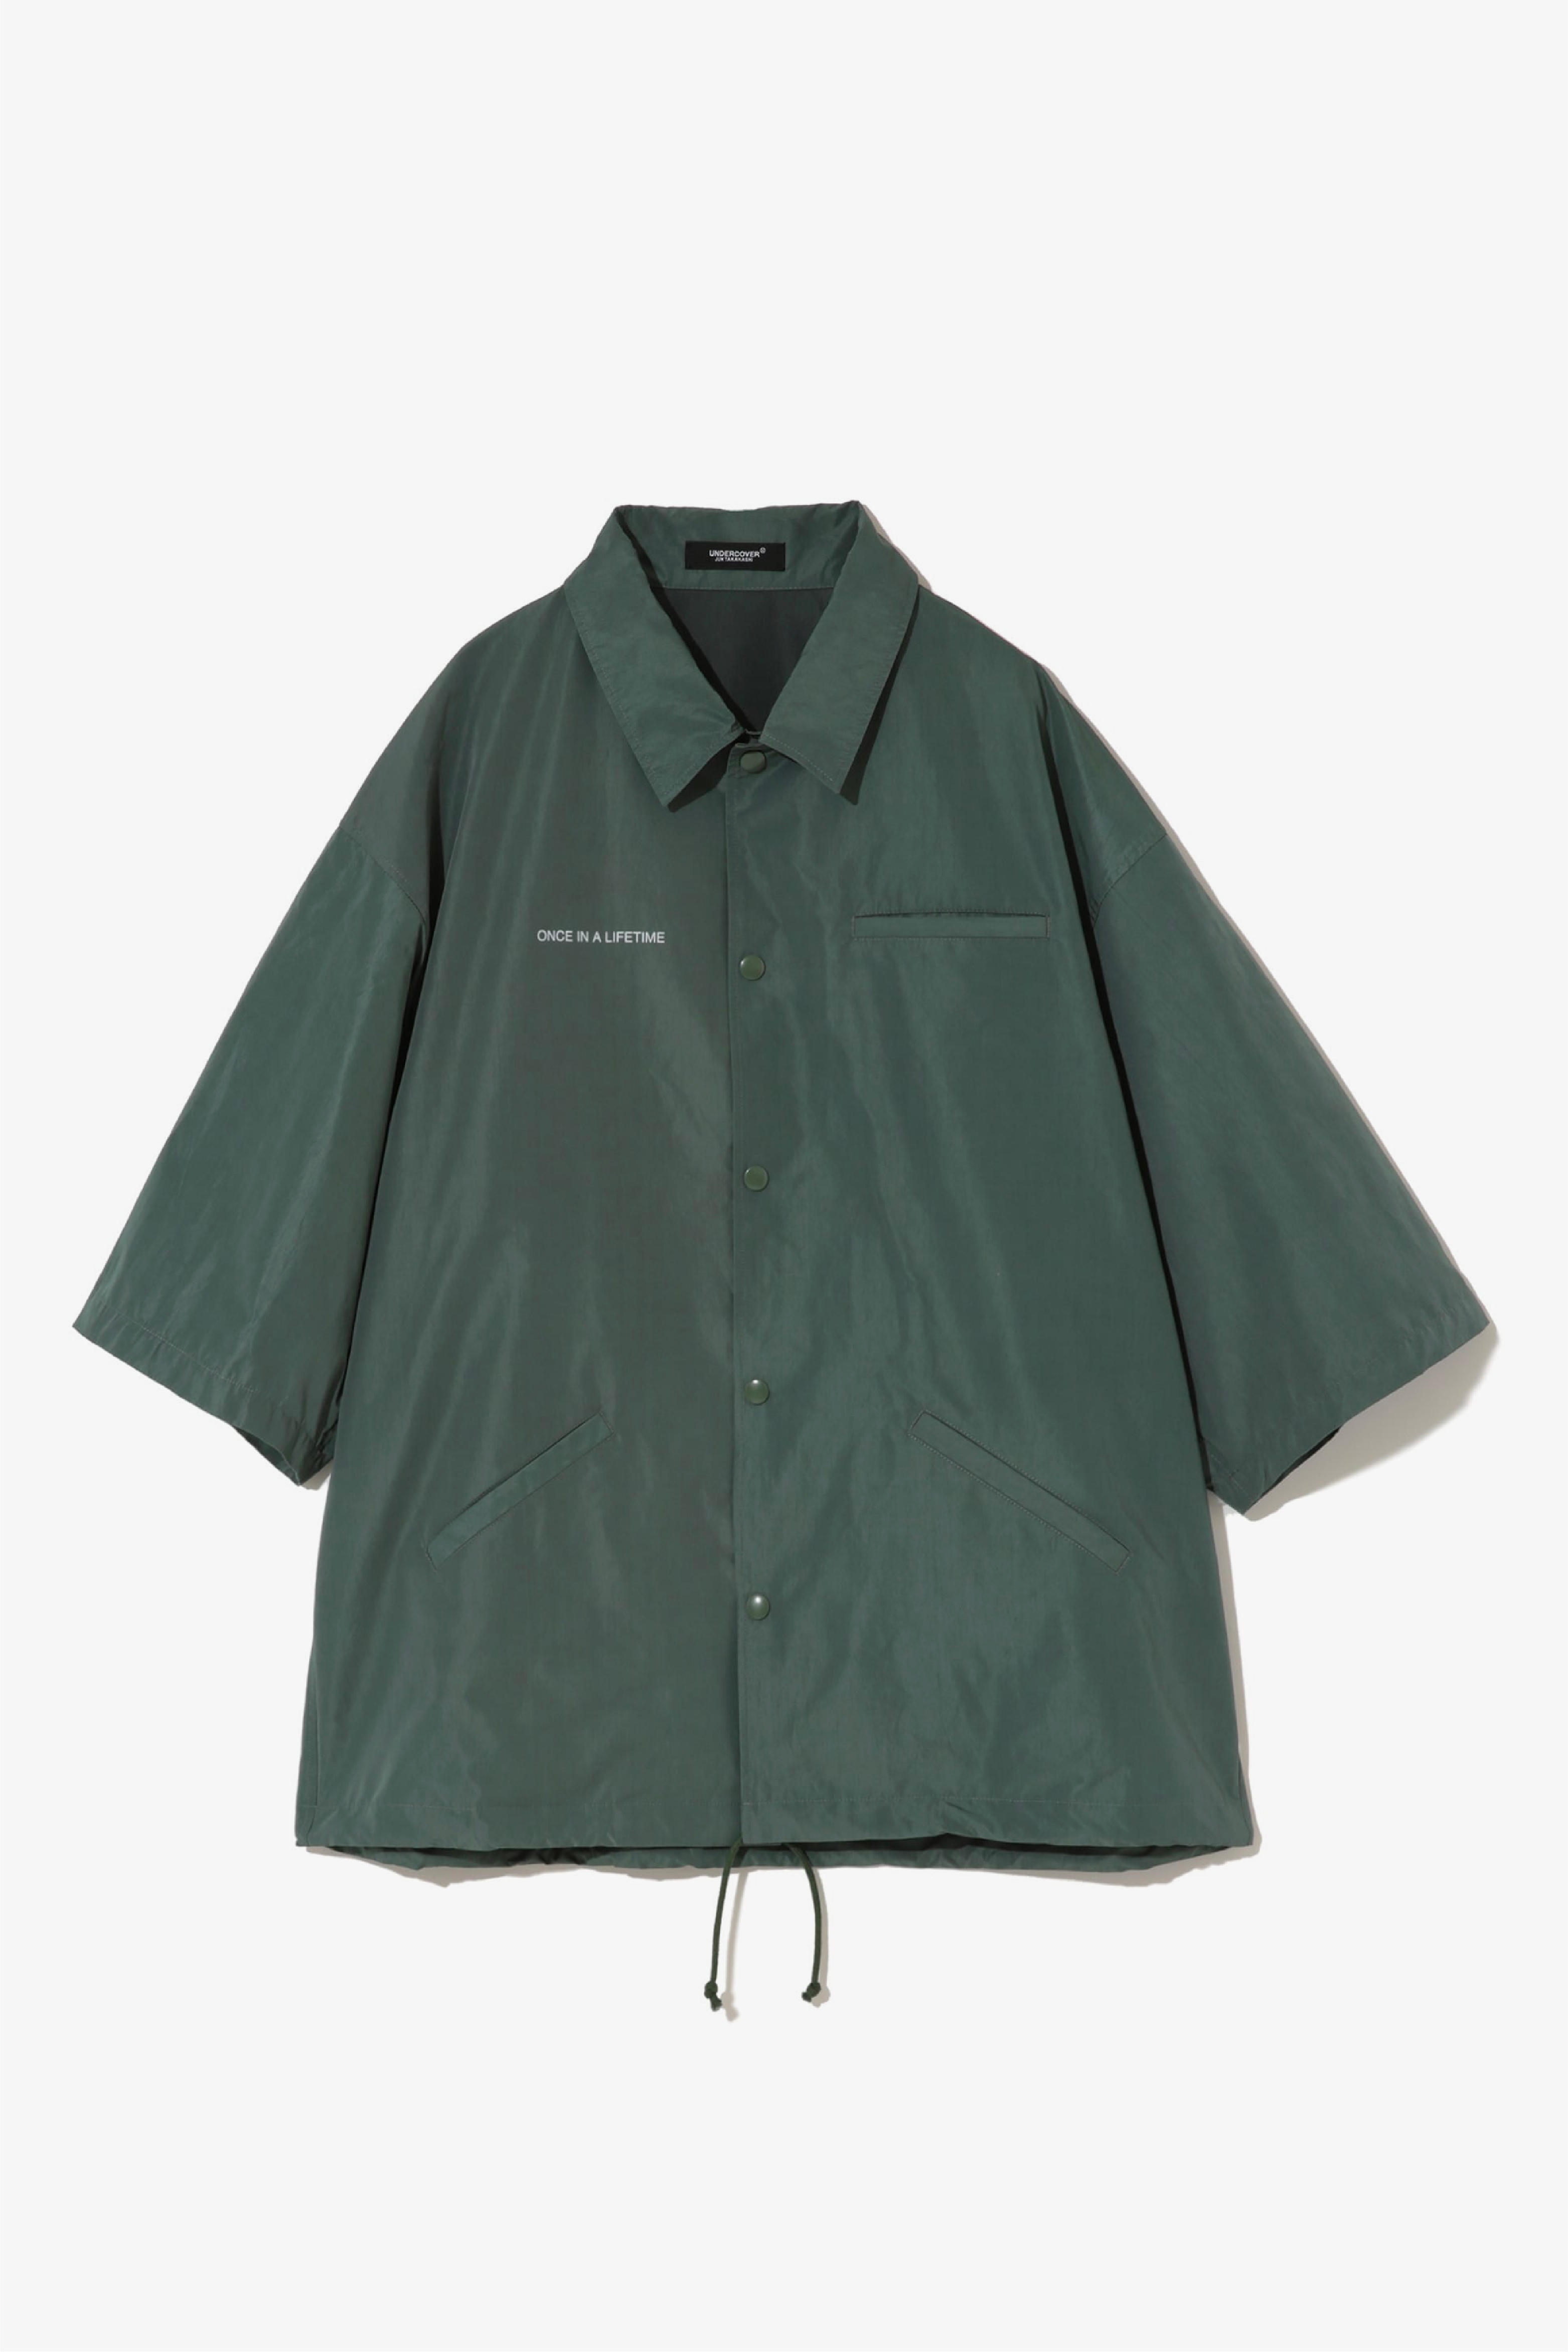 Selectshop FRAME - UNDERCOVER Shirt Shirt Dubai